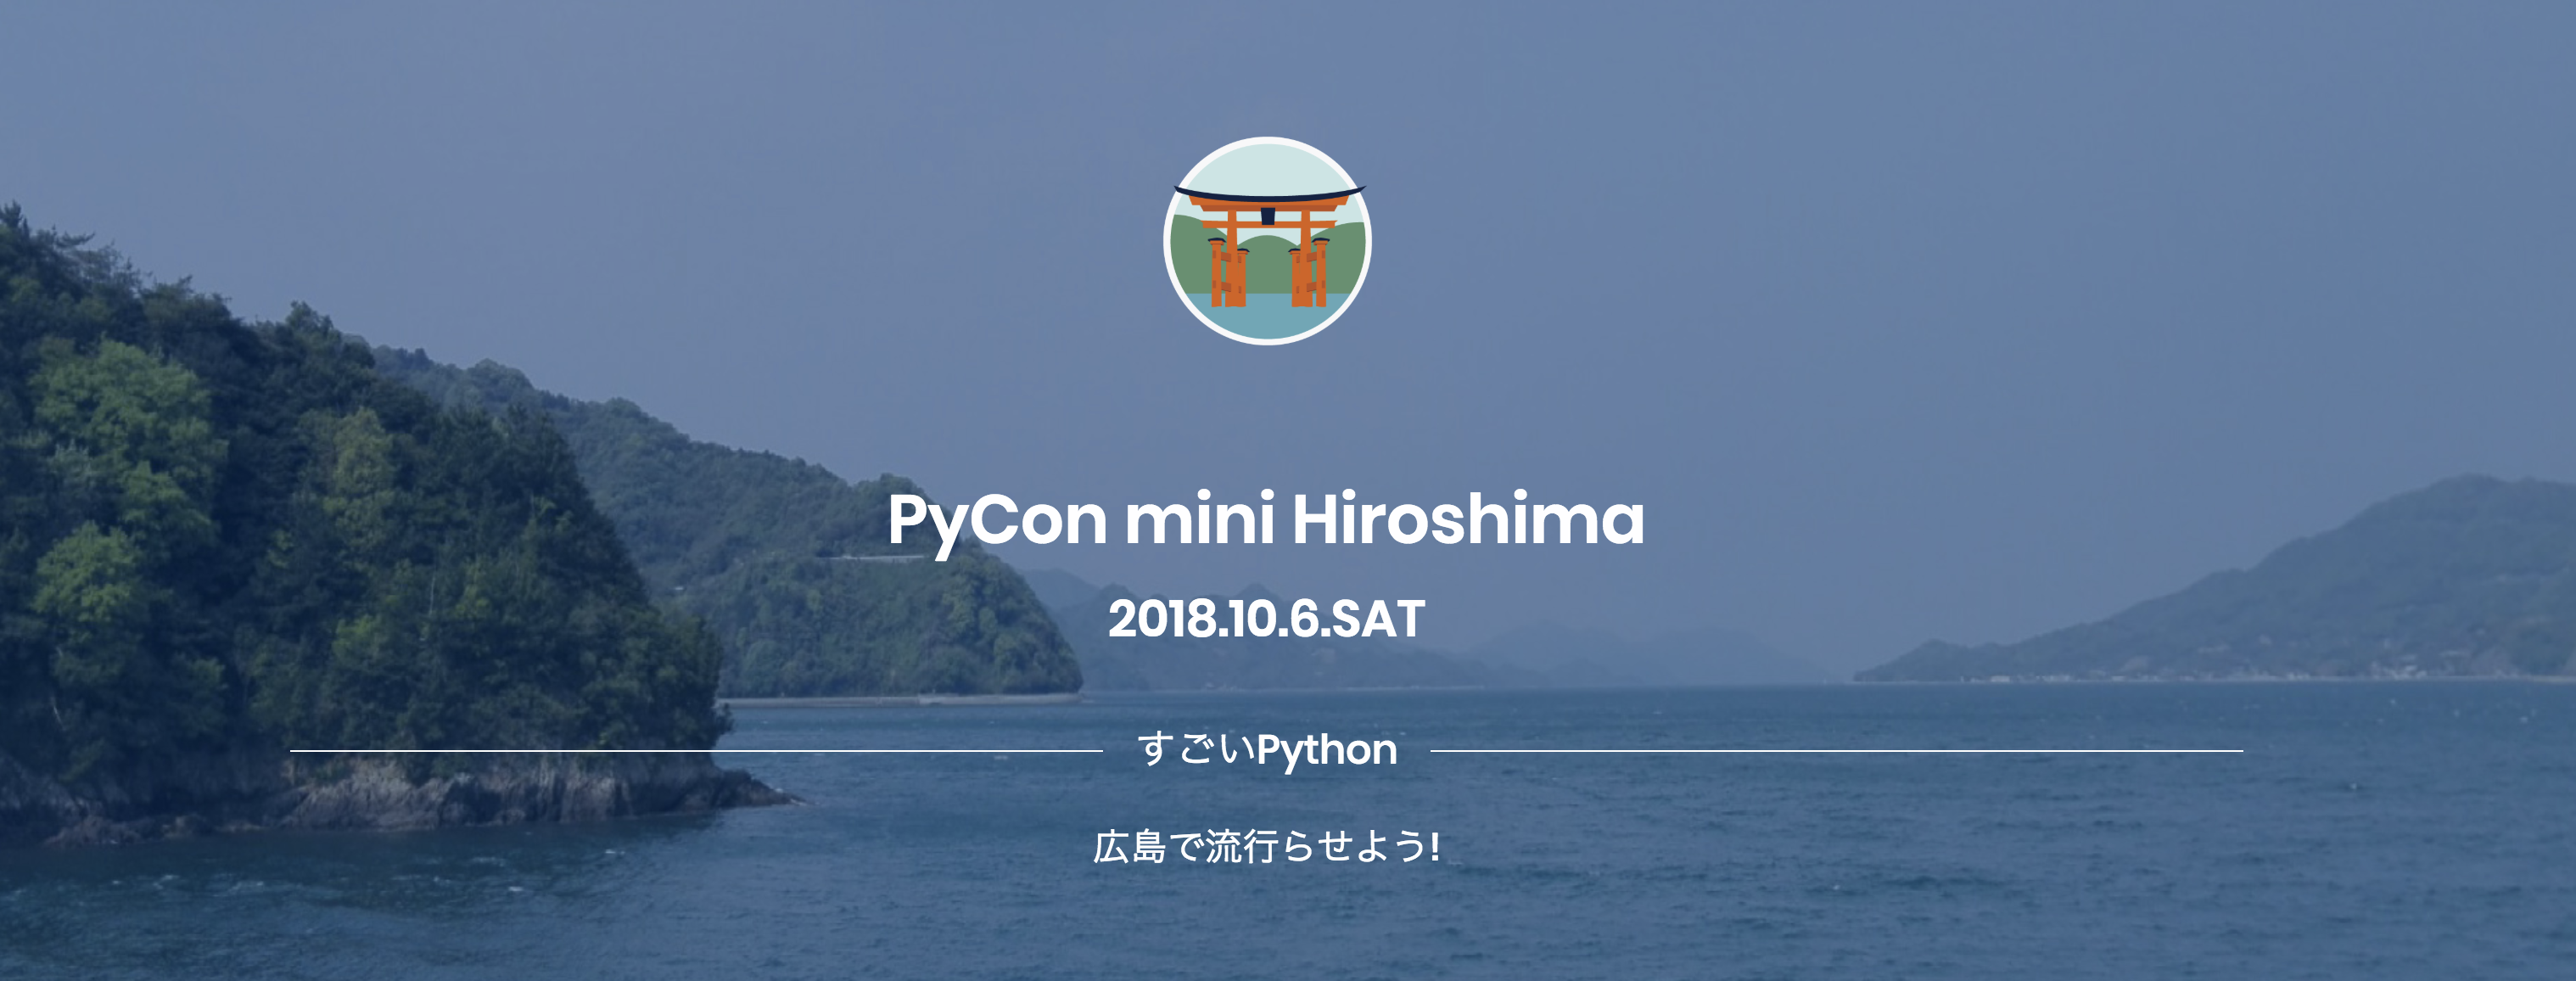 PyCon JP 2018 ロゴ